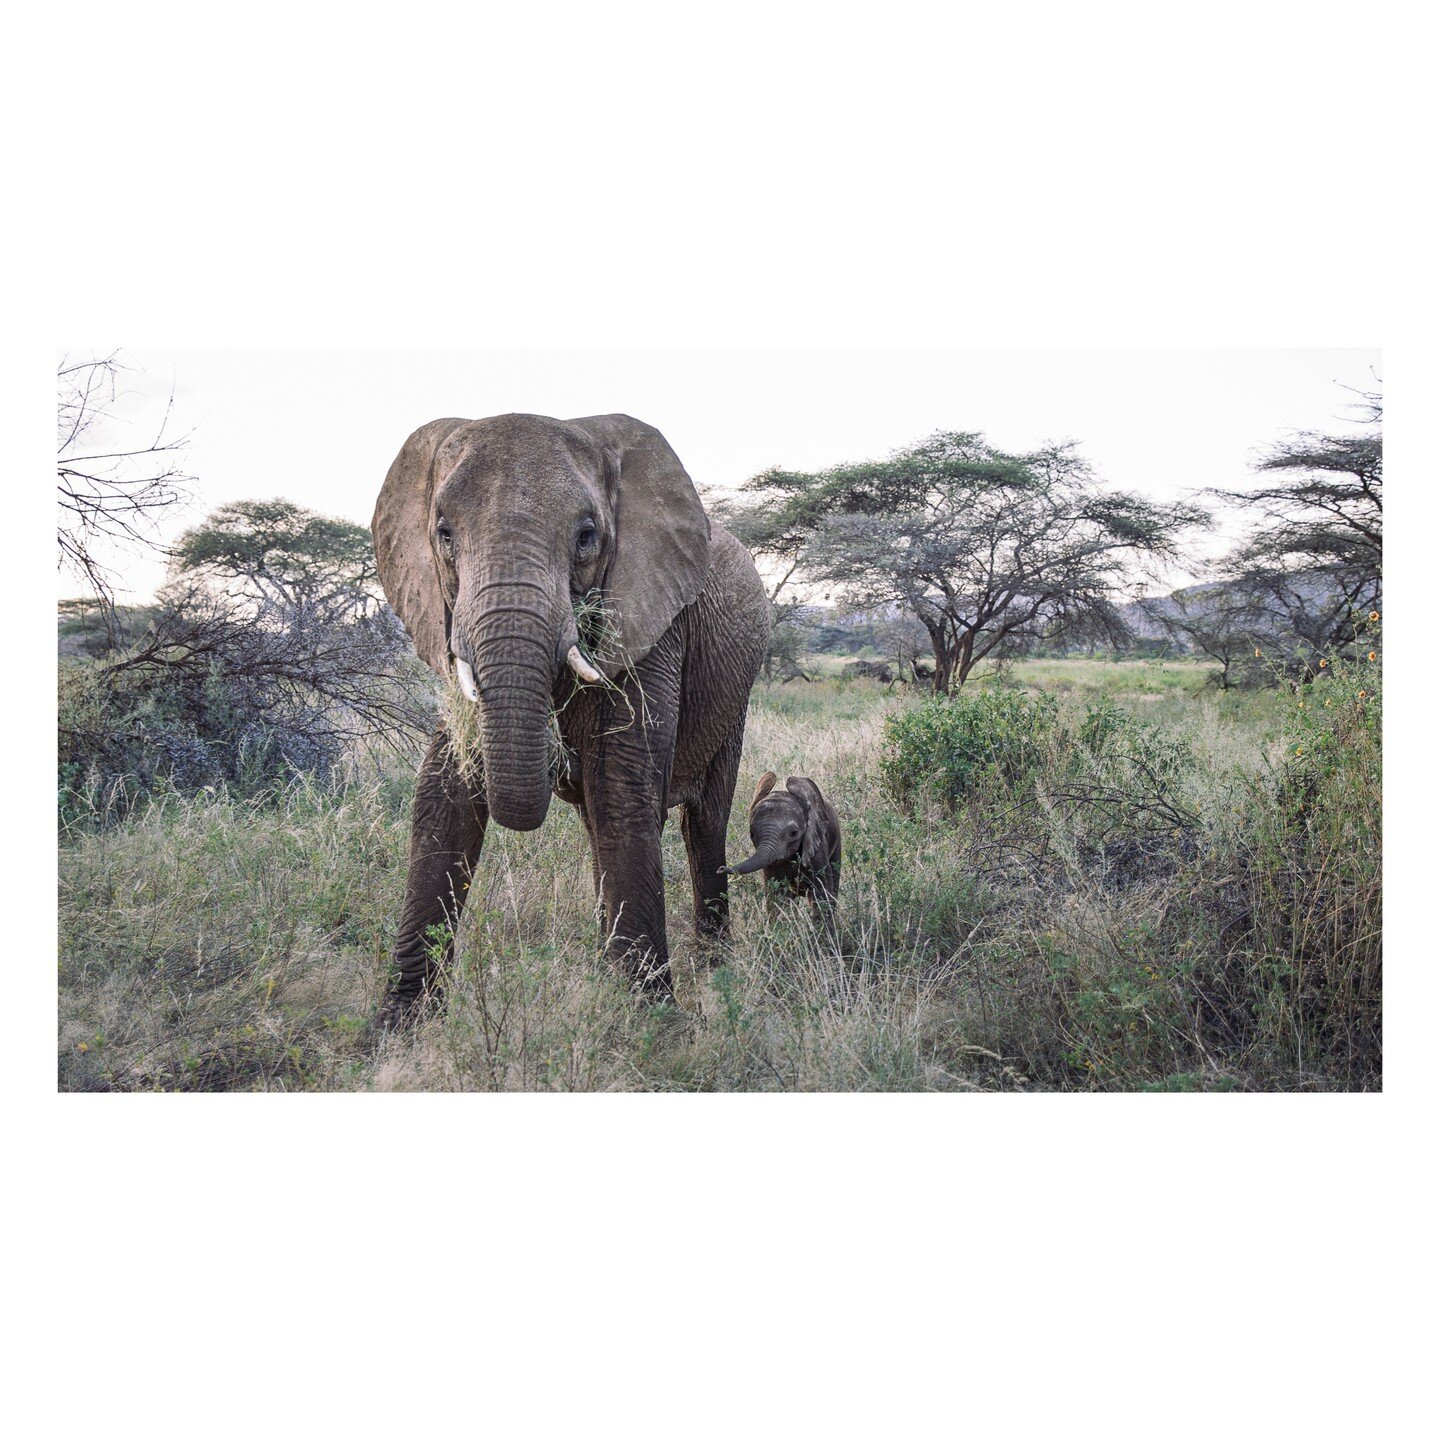 Elephant, Samburu Nationalpark, Kenya 

 #samburu #elephants #wildlife #nature #animals #elephantlove #wildlife_shots #elephantsofinstagram #elephantlover #africa #photography #safari #sunrise #wildlifephotography #travel #animal #elephantlovers #nat